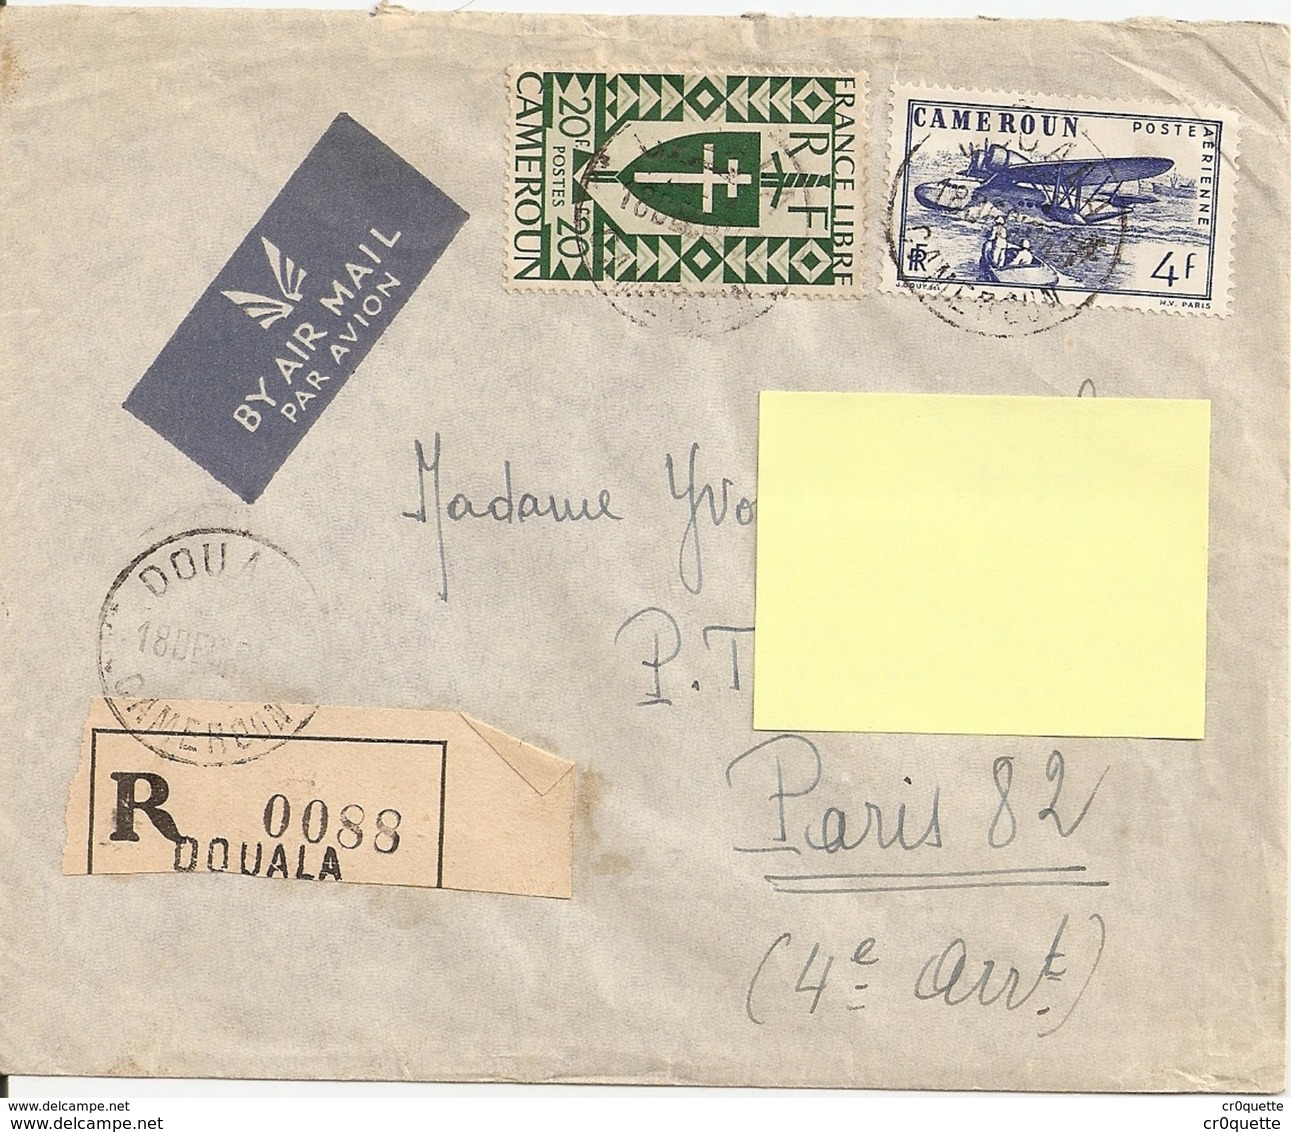 CAMEROUN DOUALA 1945 - ENVELOPPE TIMBREE Pour FRANCE - Lettres & Documents